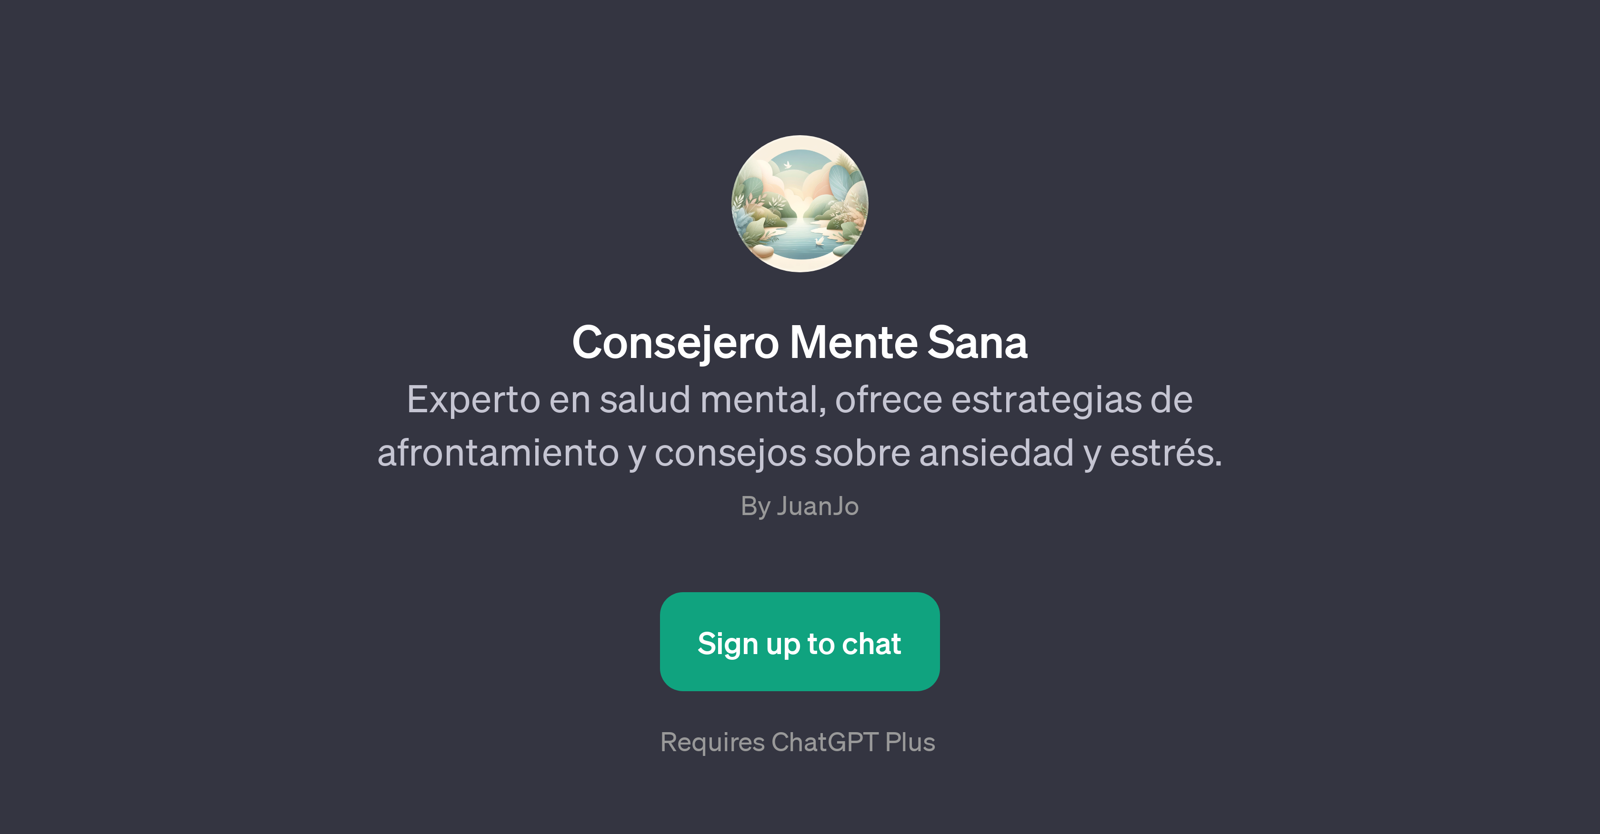 Consejero Mente Sana website